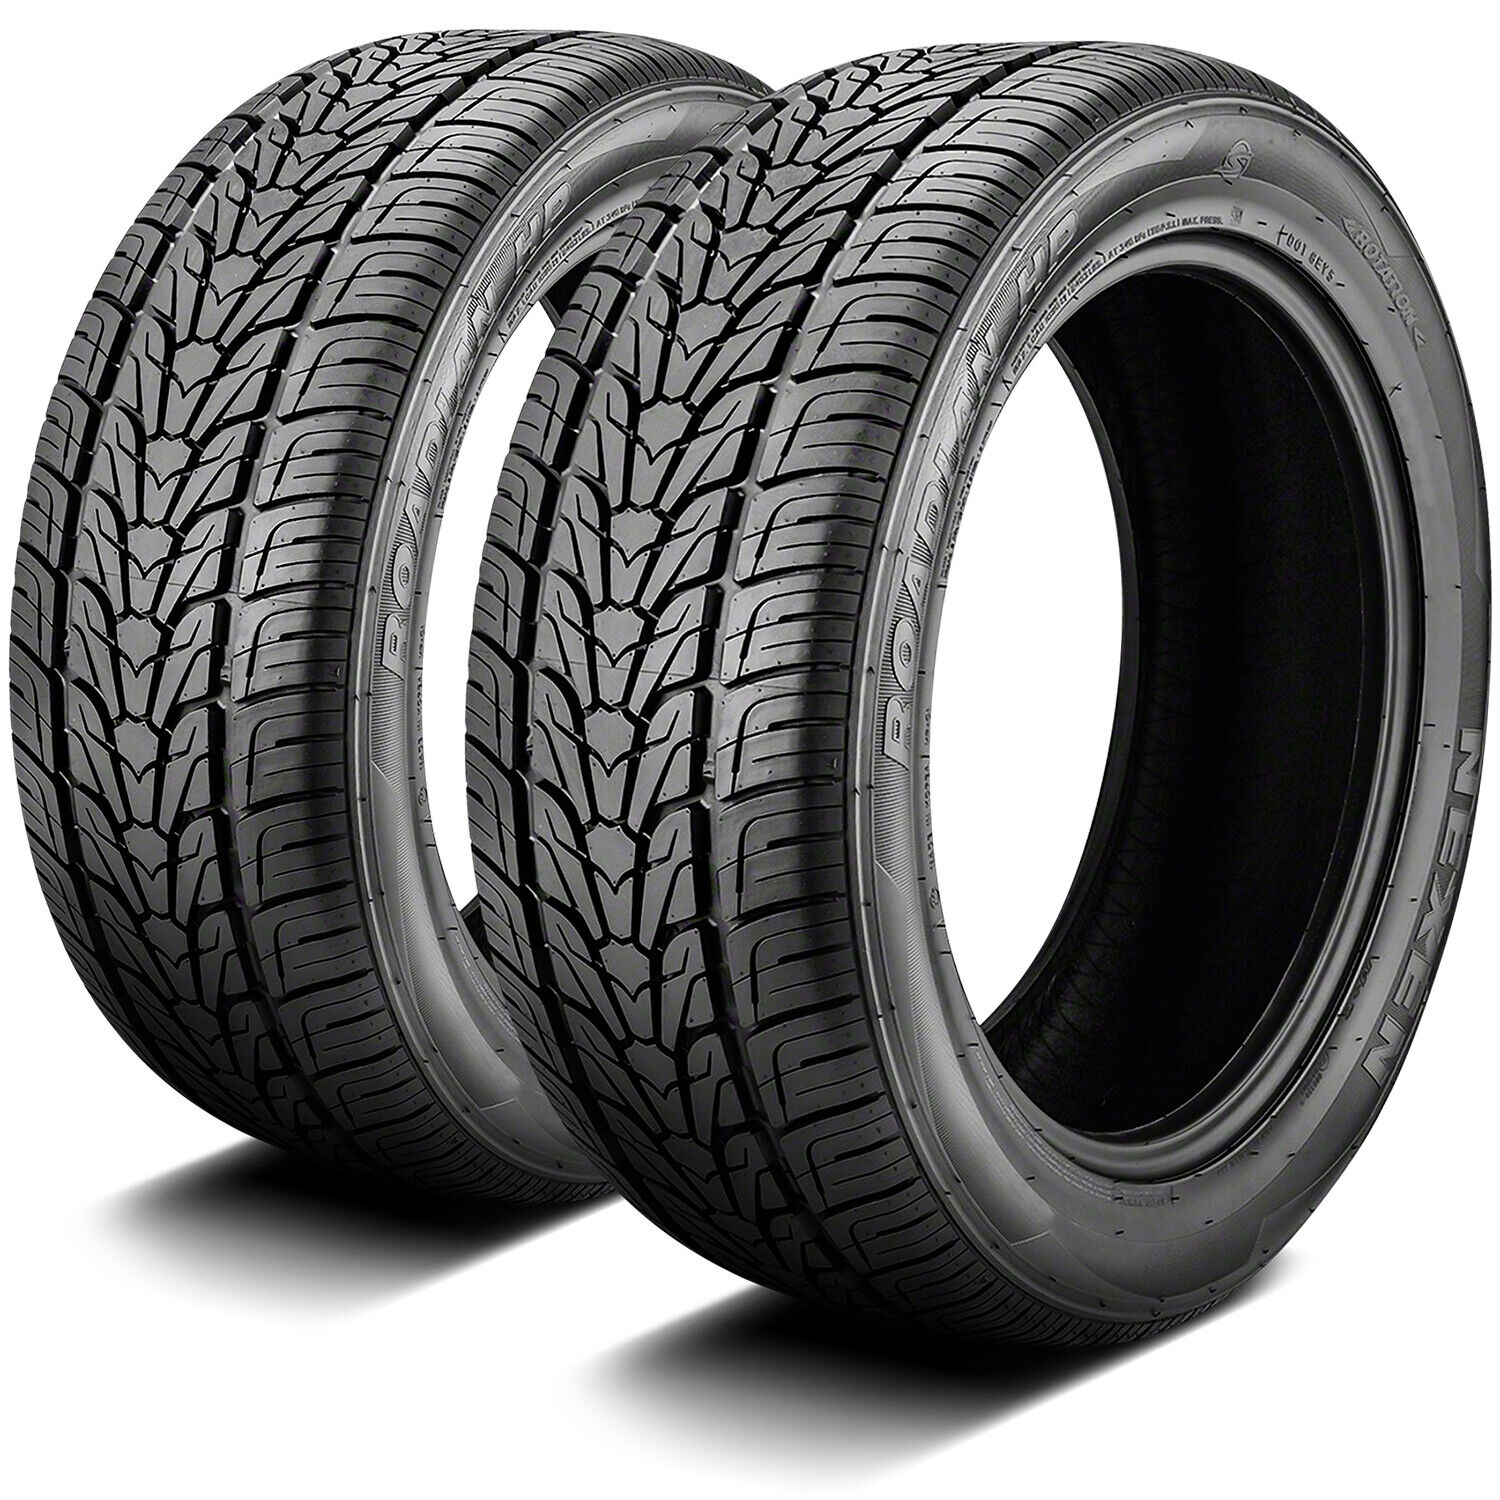 Tire Nexen Roadian HP 265/35R22 102V XL Performance A/S | eBay